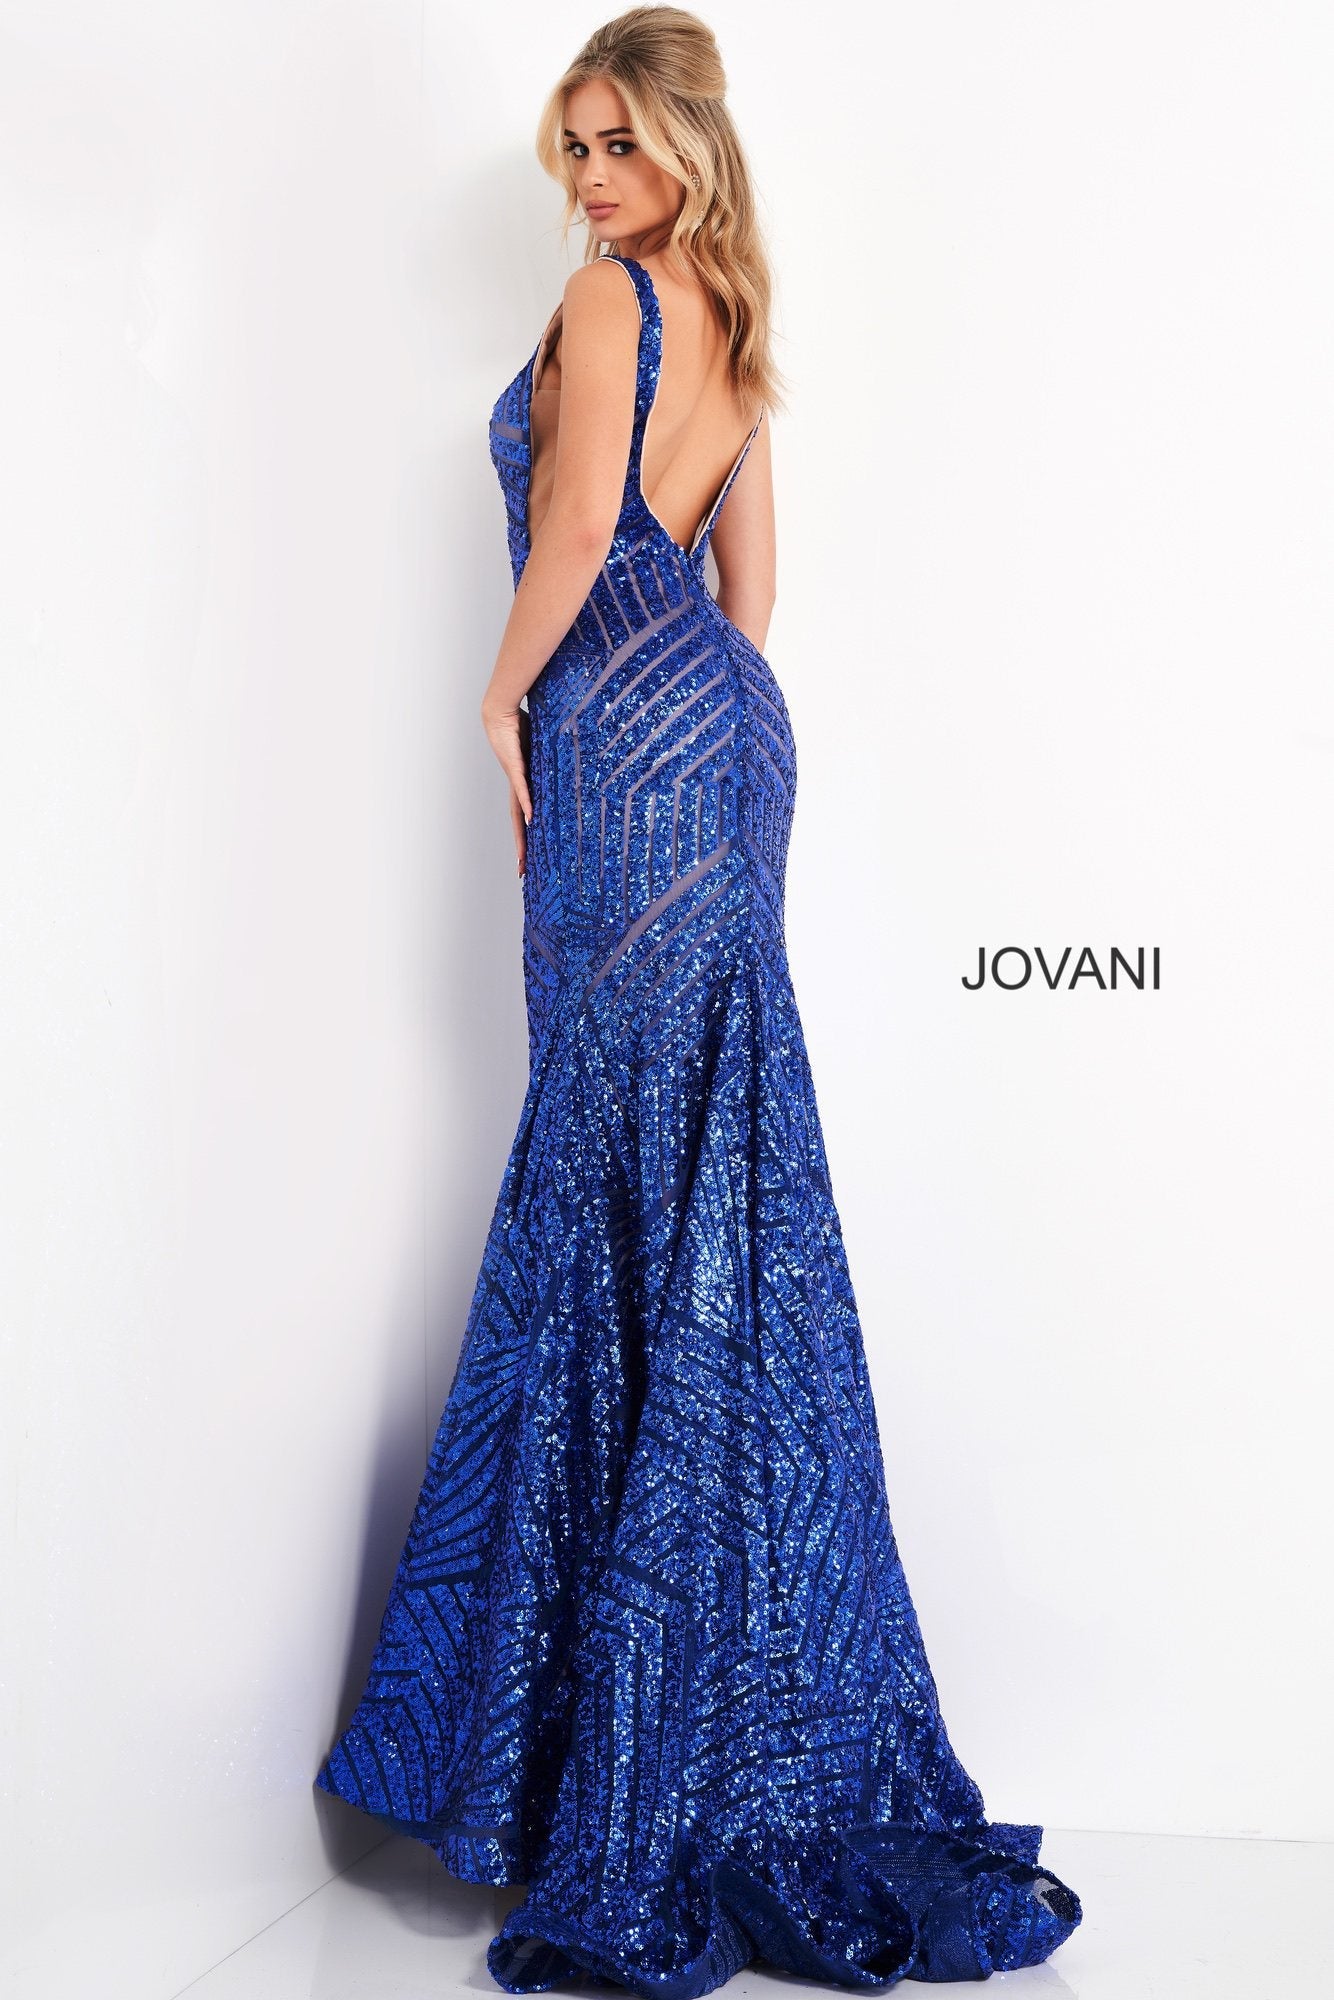 Jovani 59762 Size 22 Neon Orange Sequin Embellished Mermaid Prom Dress Pageant Gown plunging neckline